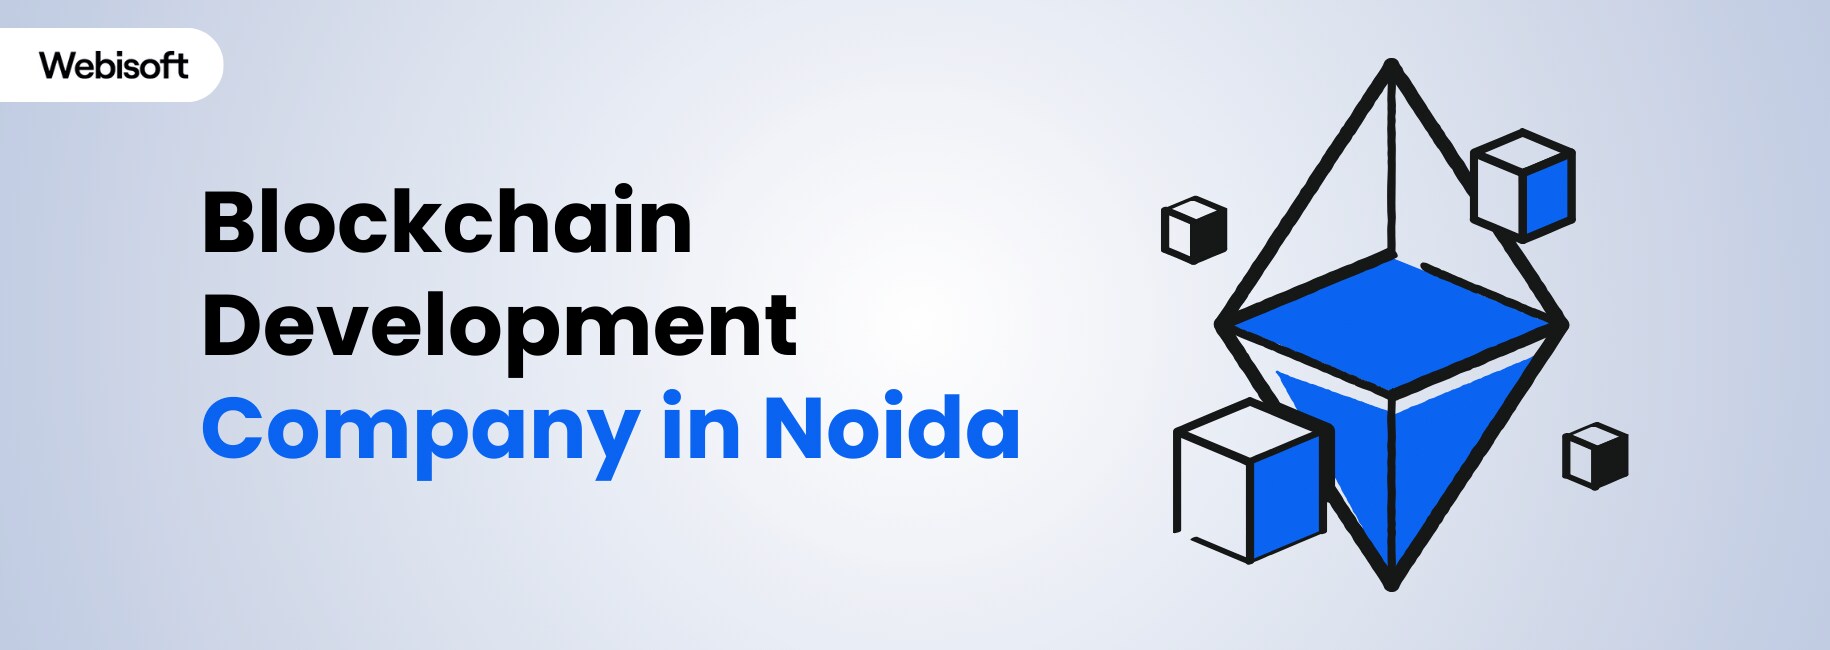 Blockchain Development Company in Noida: Innovation Hub